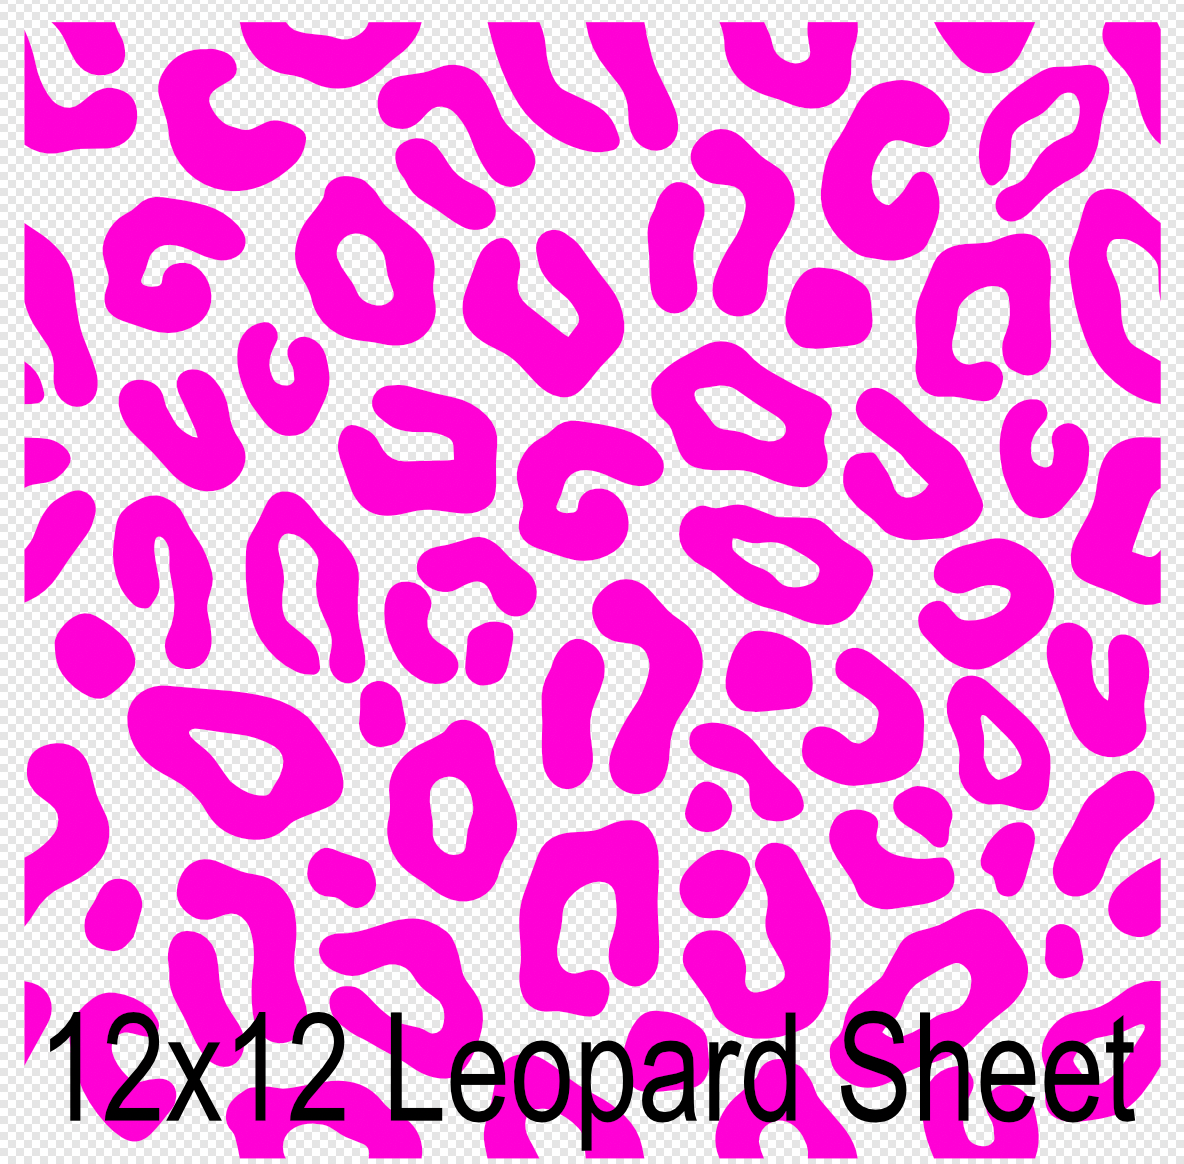 12x12 Leopard Sheet Screen Print